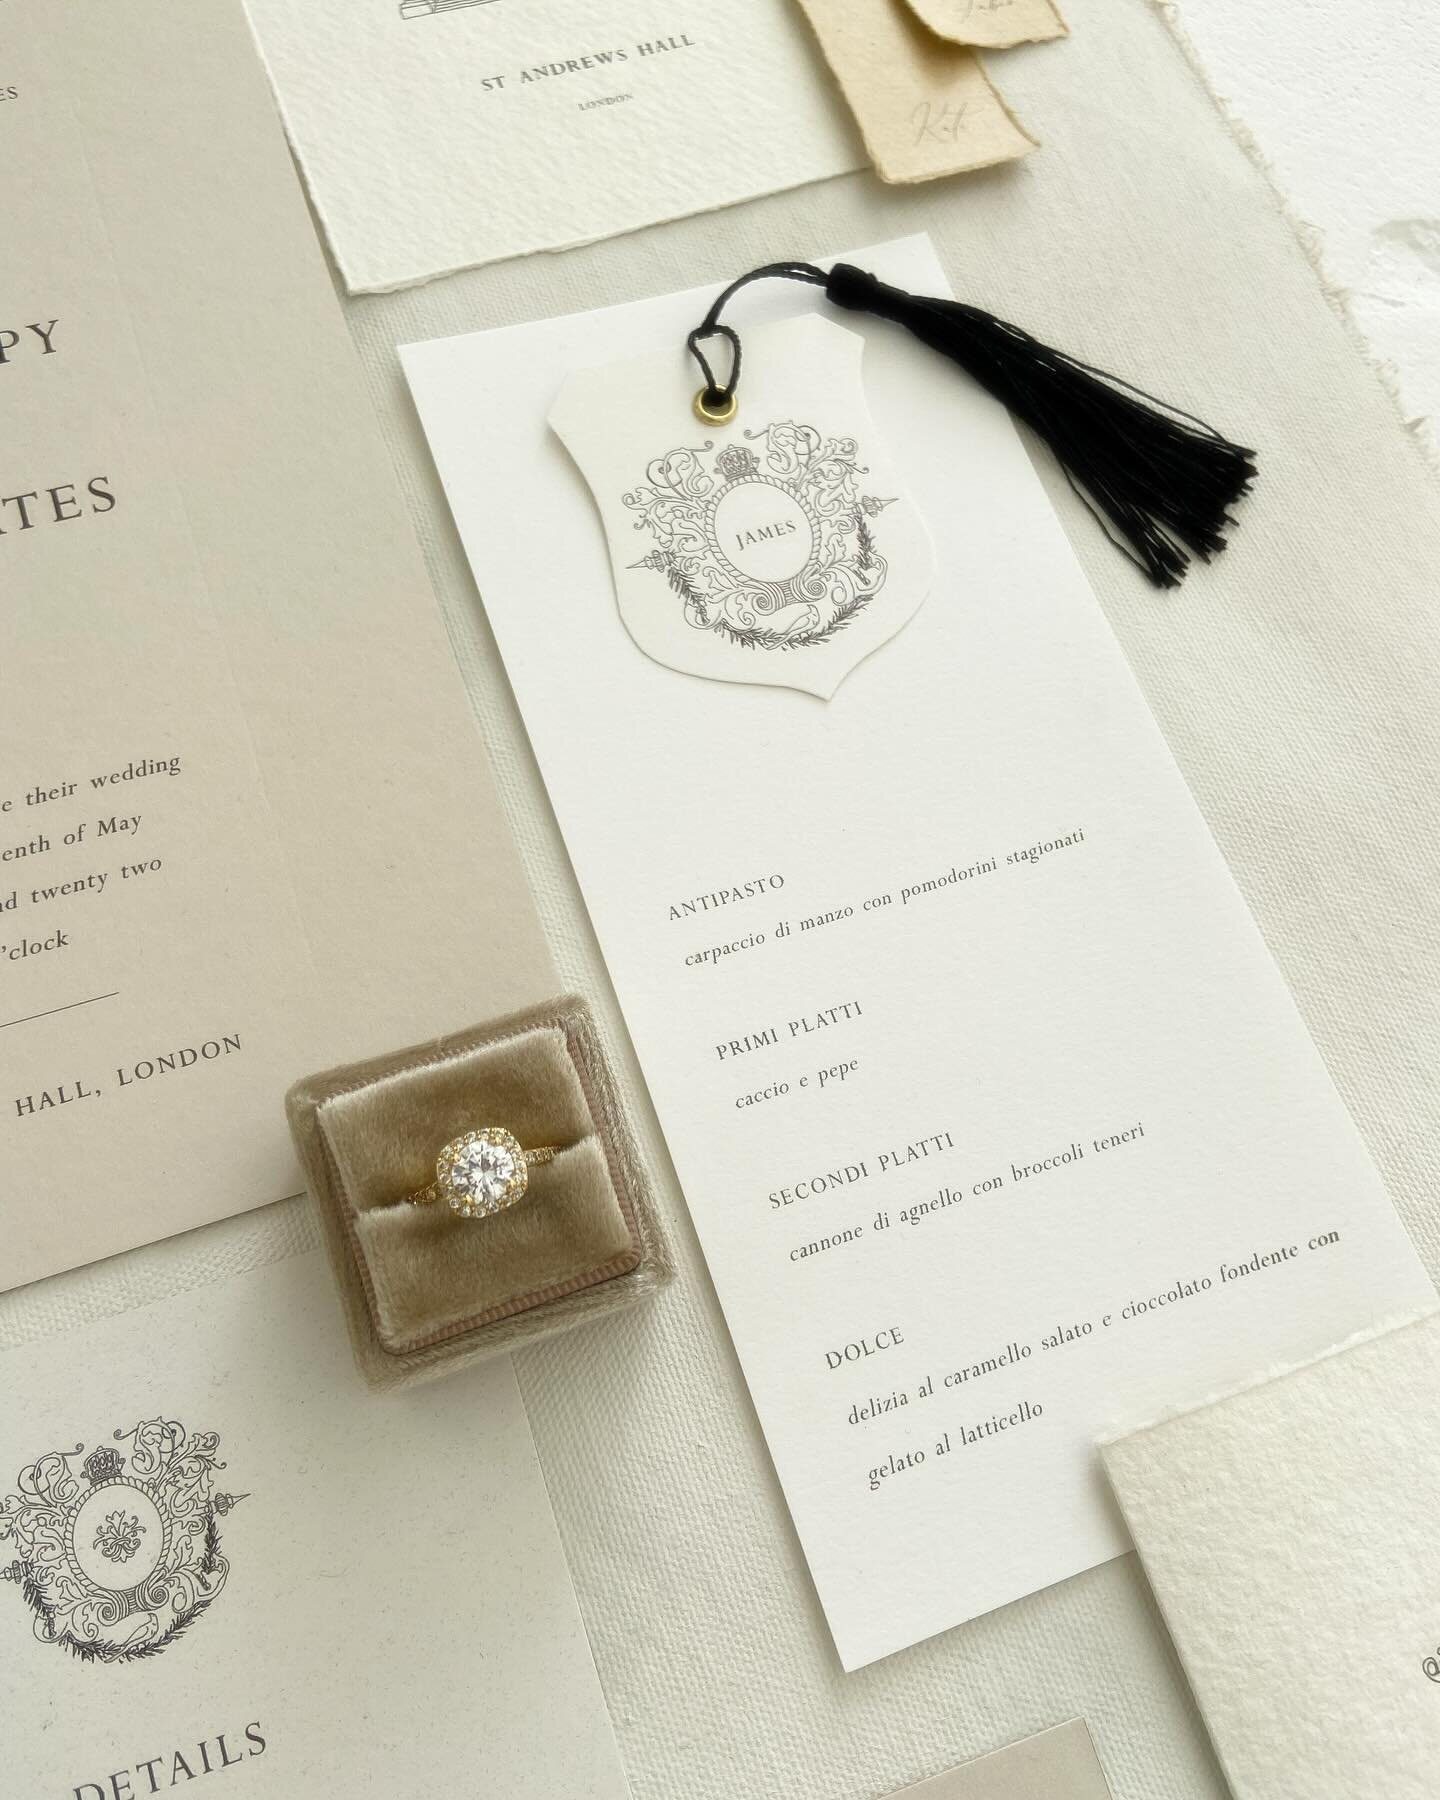 Hand drawn crests and tassels on menus 🖤
.
.
.
#weddingstationery #bespokeweddingstationery #ukwedding #ukweddingstationery #personalisedstationery